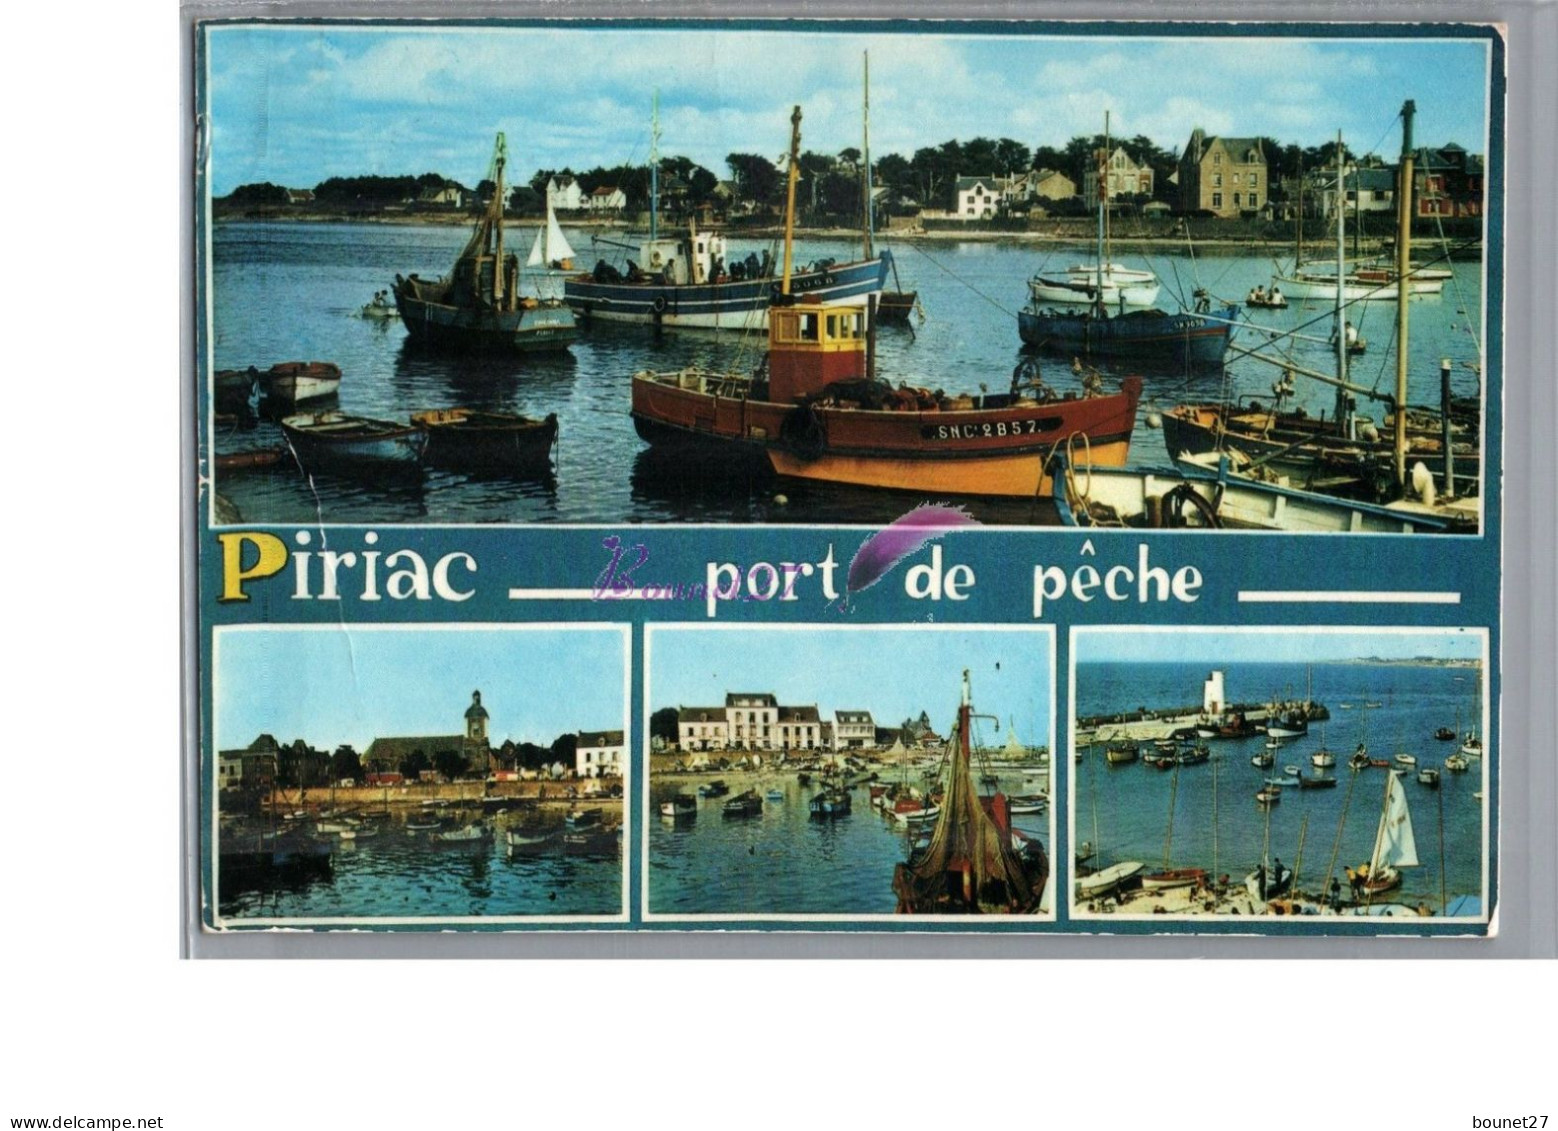 PIRIAC SUR MER 44 - Le Port De Pêche Bateau Voilier 1983 - Piriac Sur Mer